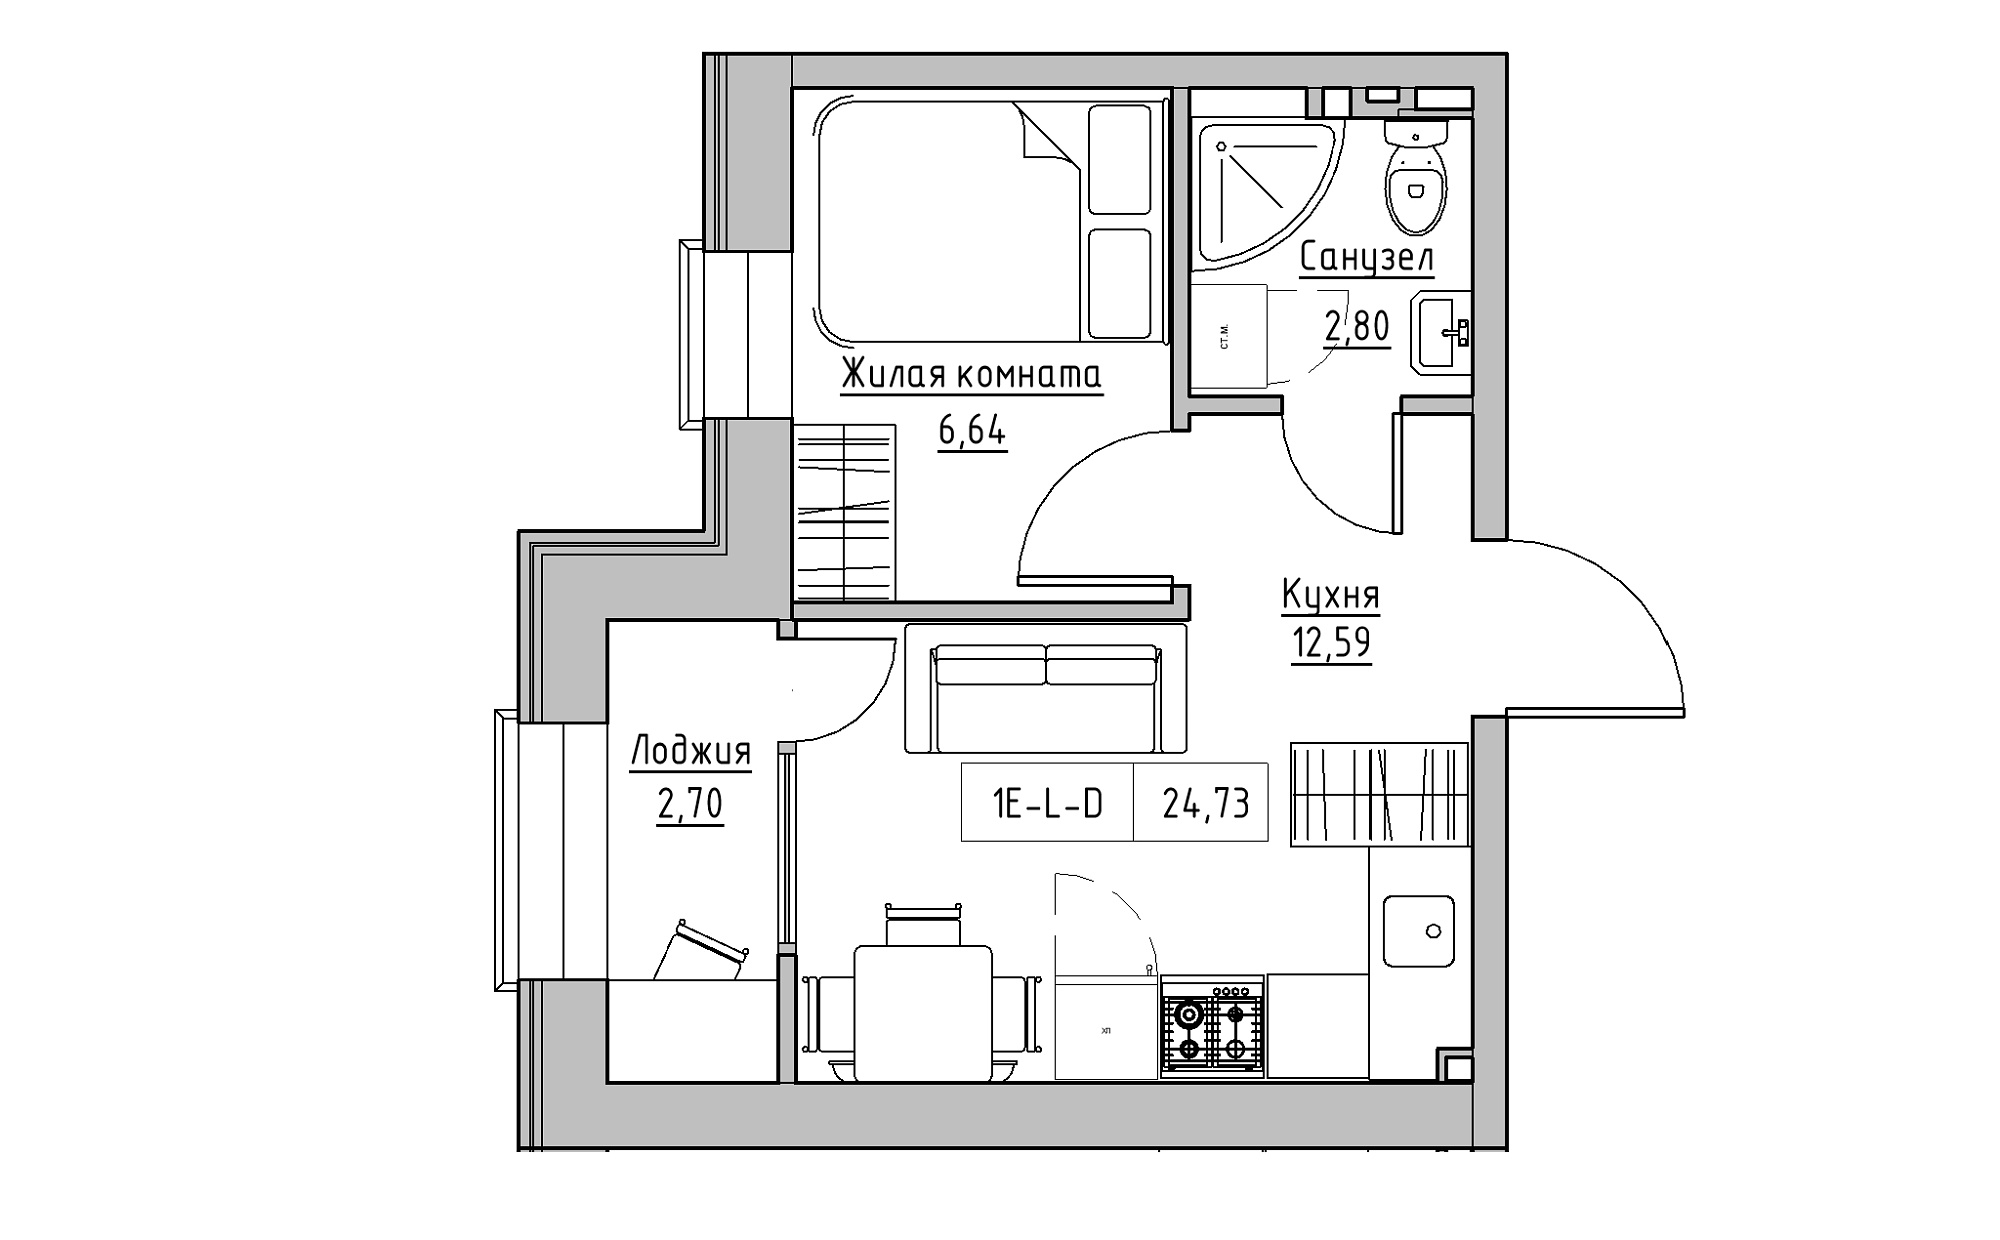 Planning 1-rm flats area 24.73m2, KS-022-01/0013.